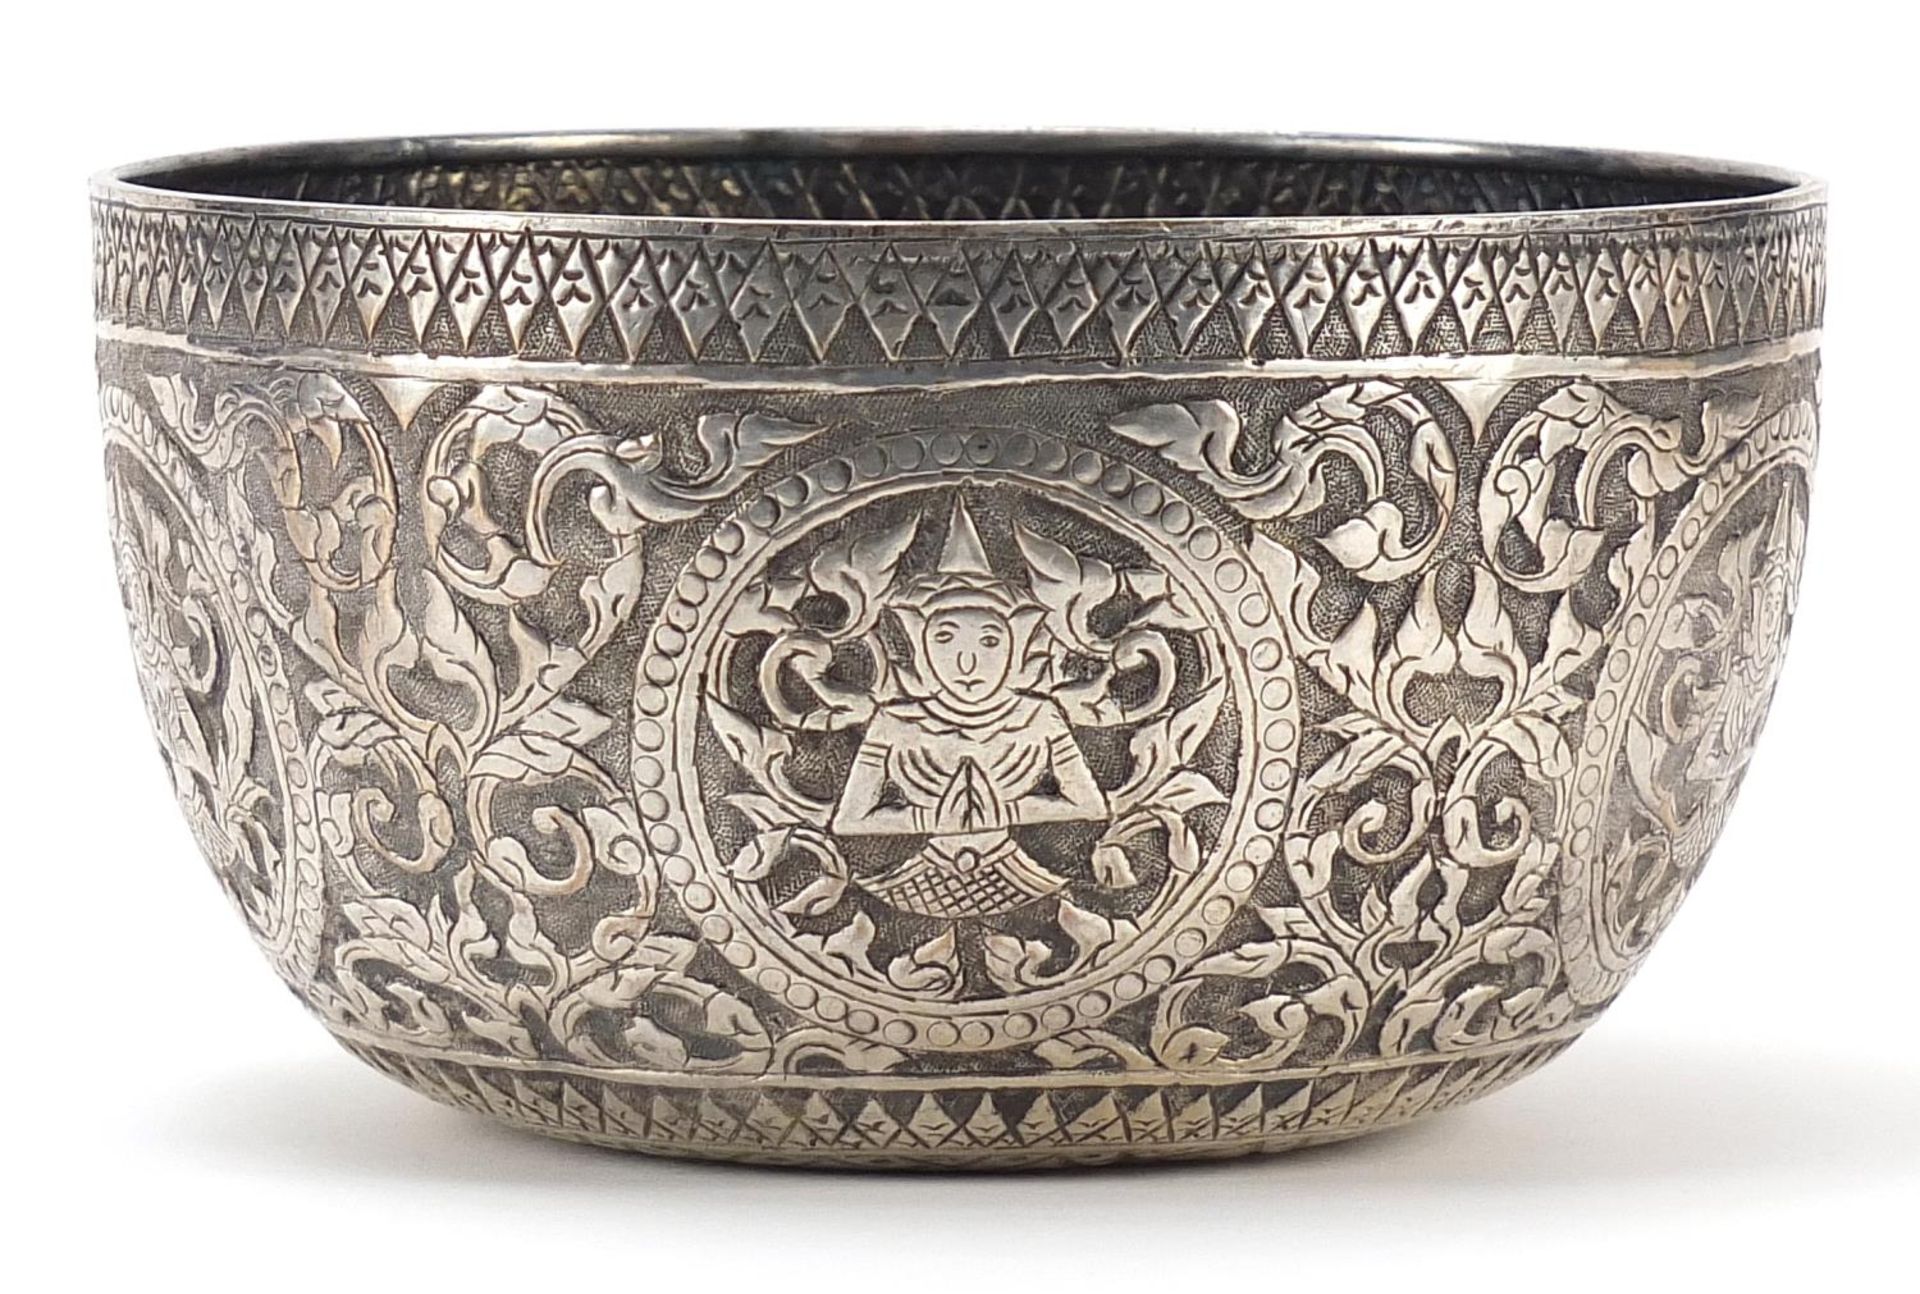 Thai silver coloured metal bowl embossed with deities amongst flowers, 15.5cm in diameter, 111g